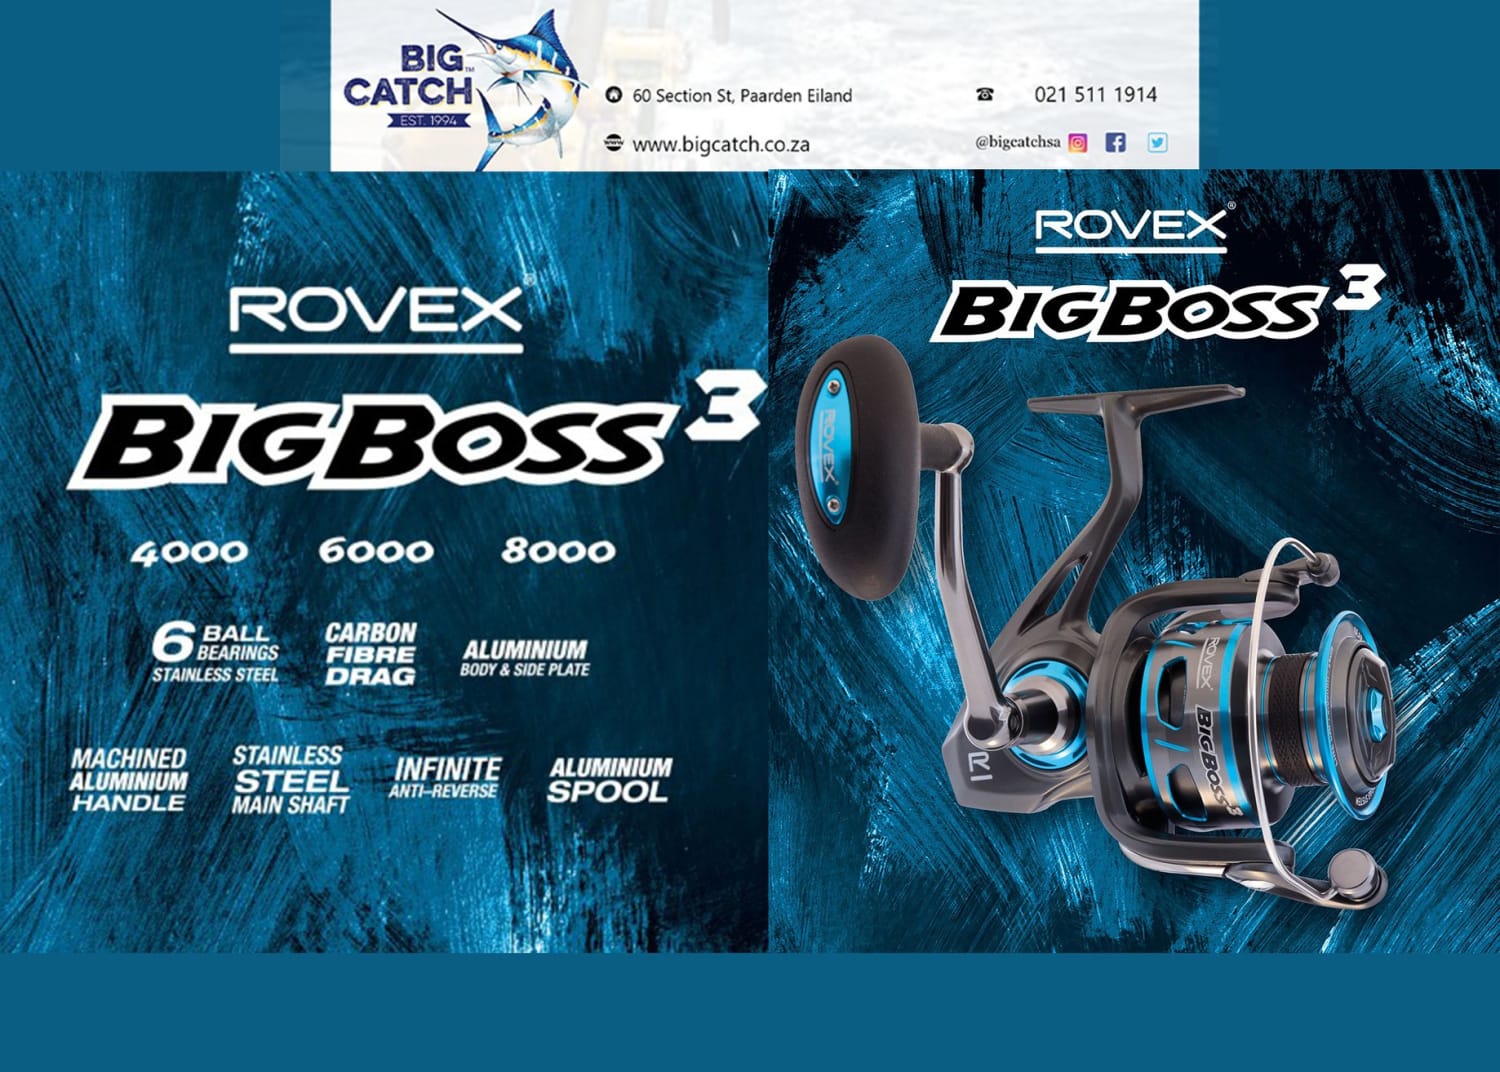 Rovex Big Boss 3 Fishing Reel